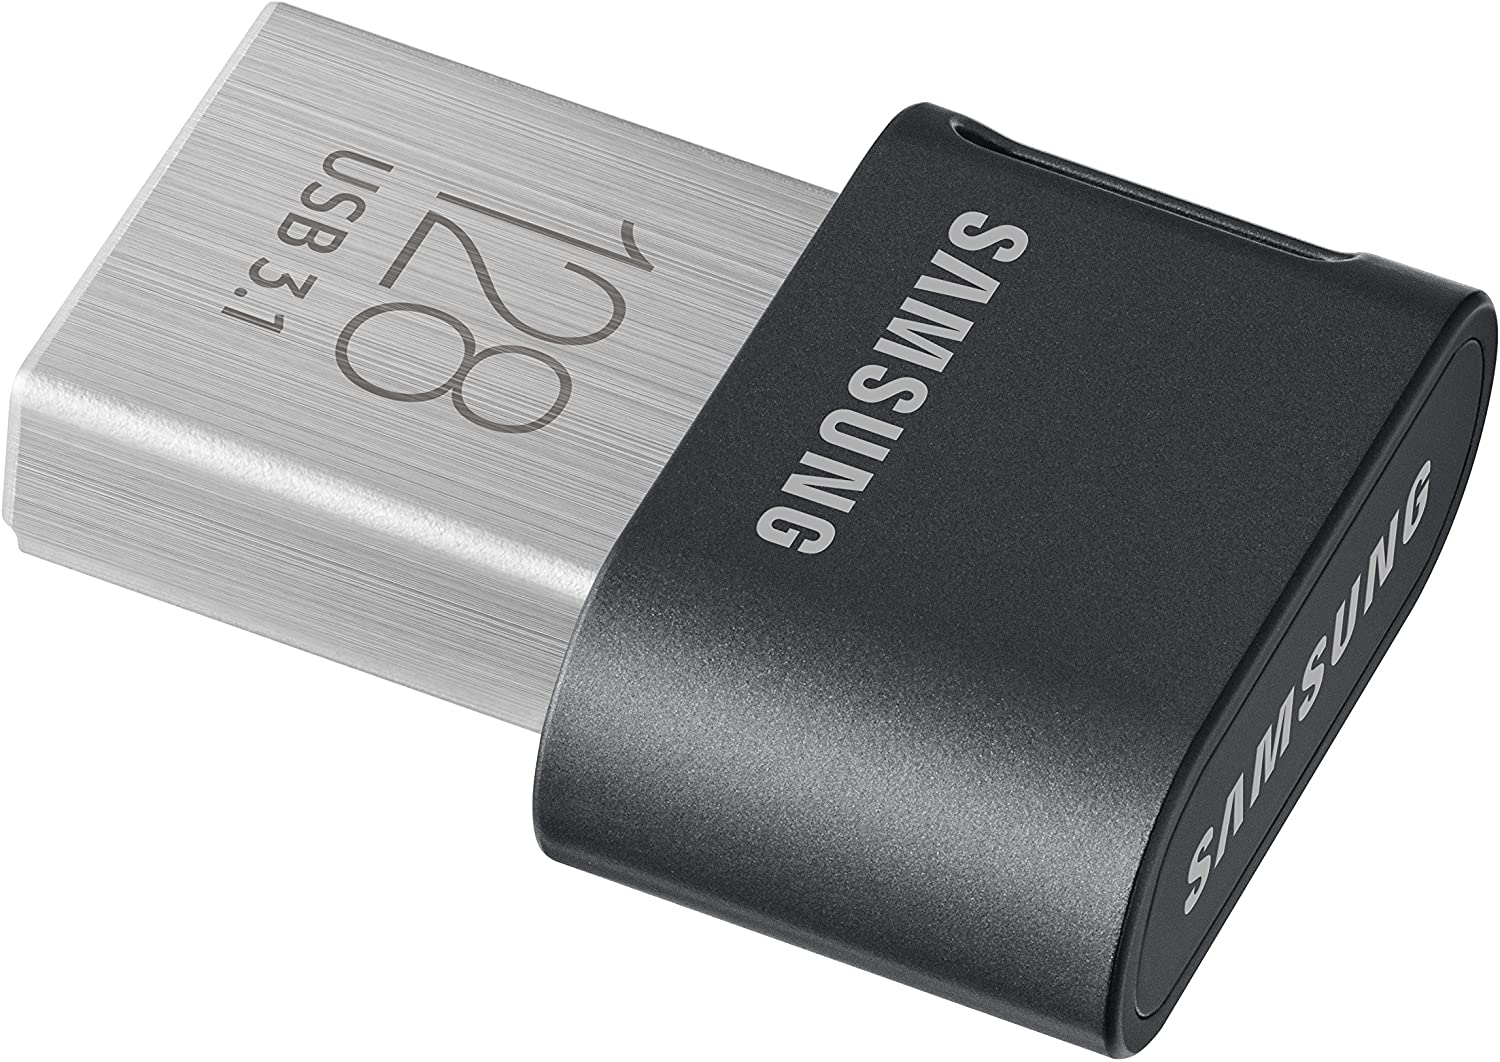 Samsung Fit Plus Flash Drive